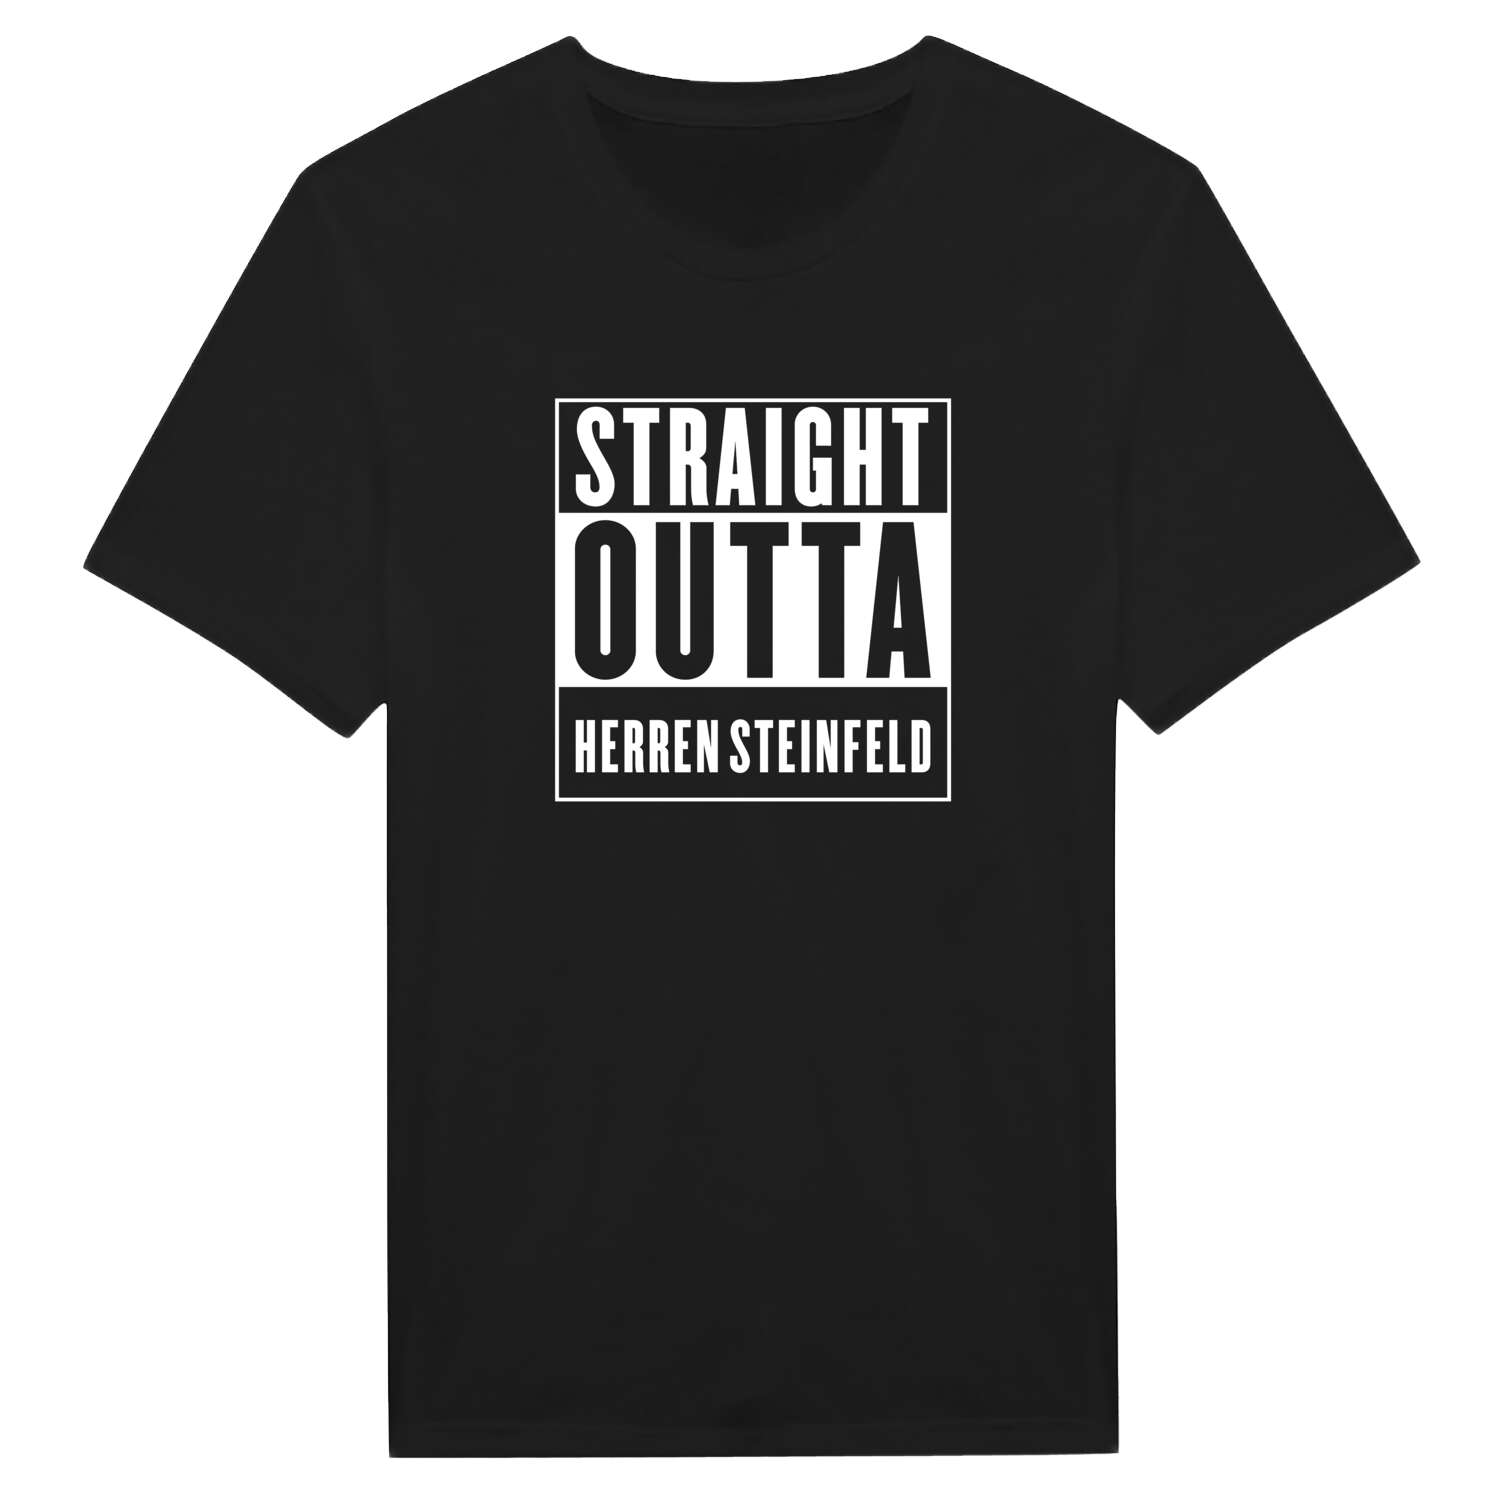 Herren Steinfeld T-Shirt »Straight Outta«